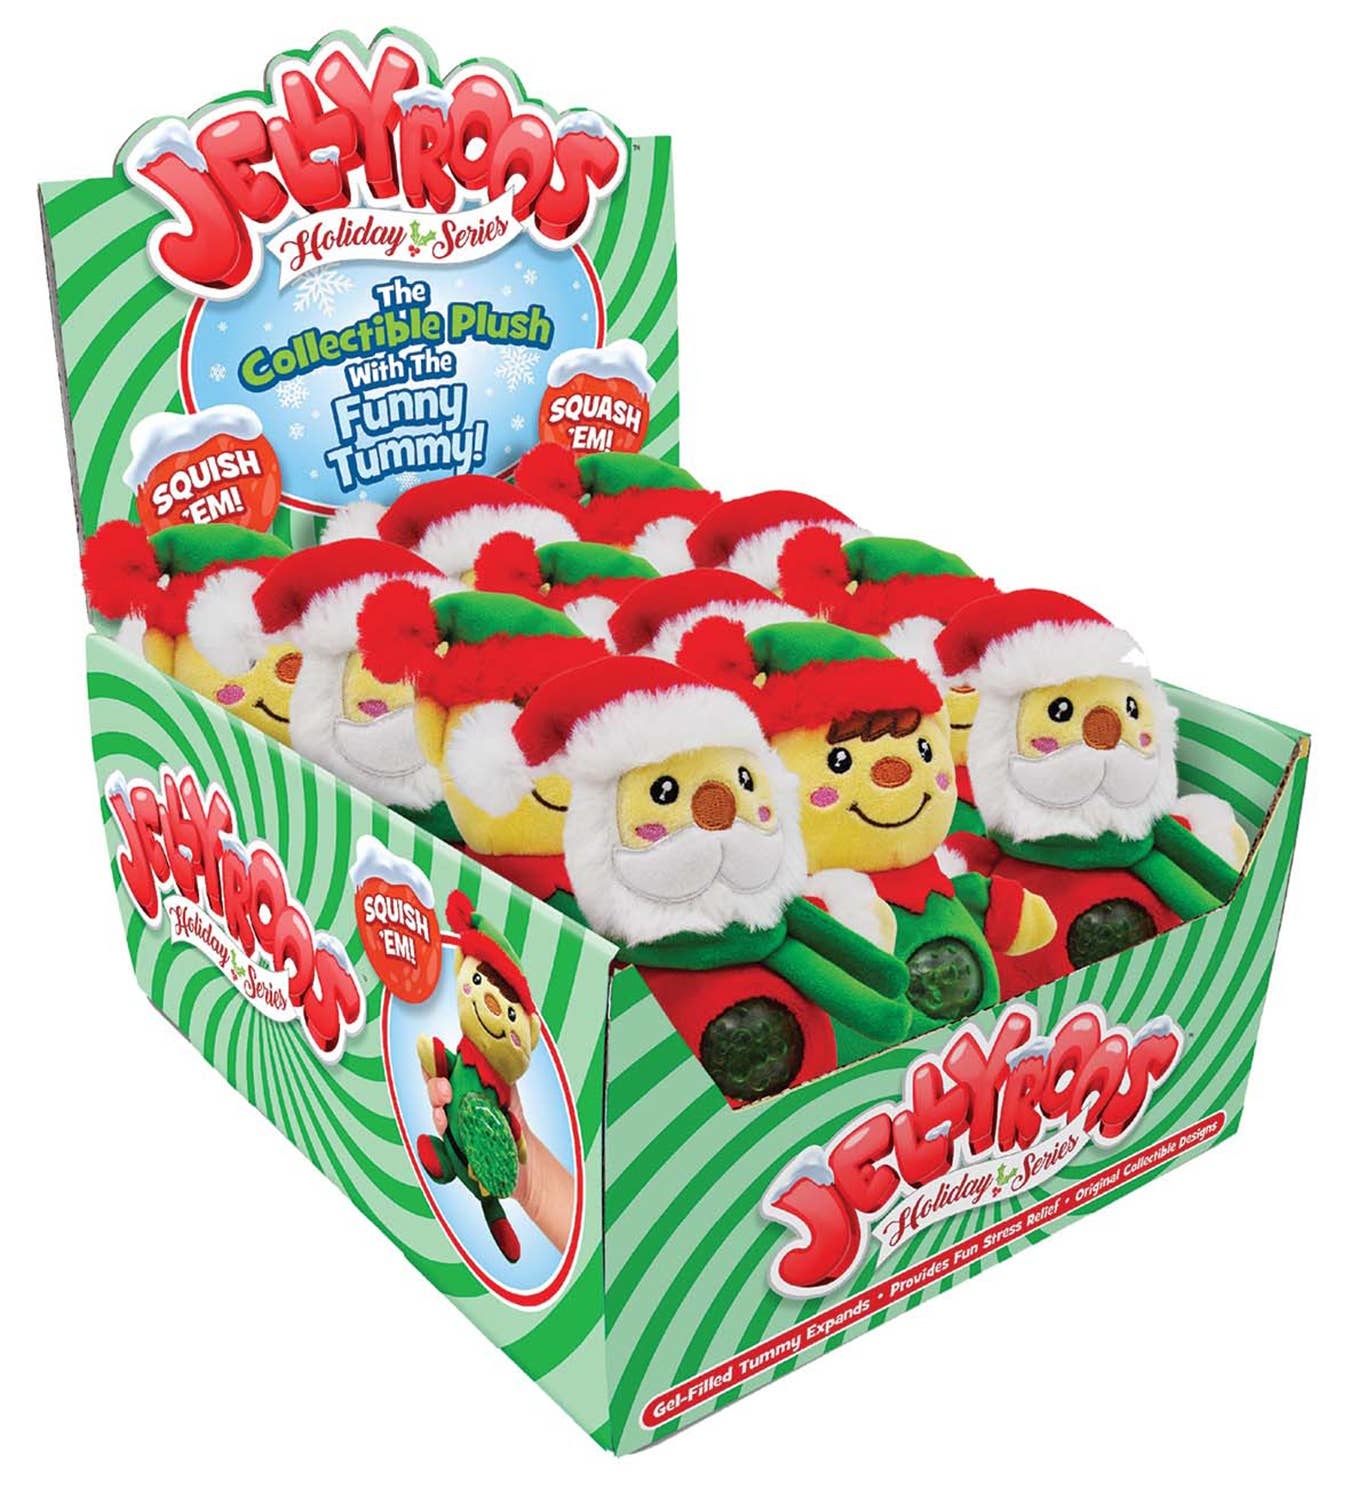 Streamline Jellyroos Christmas Santa